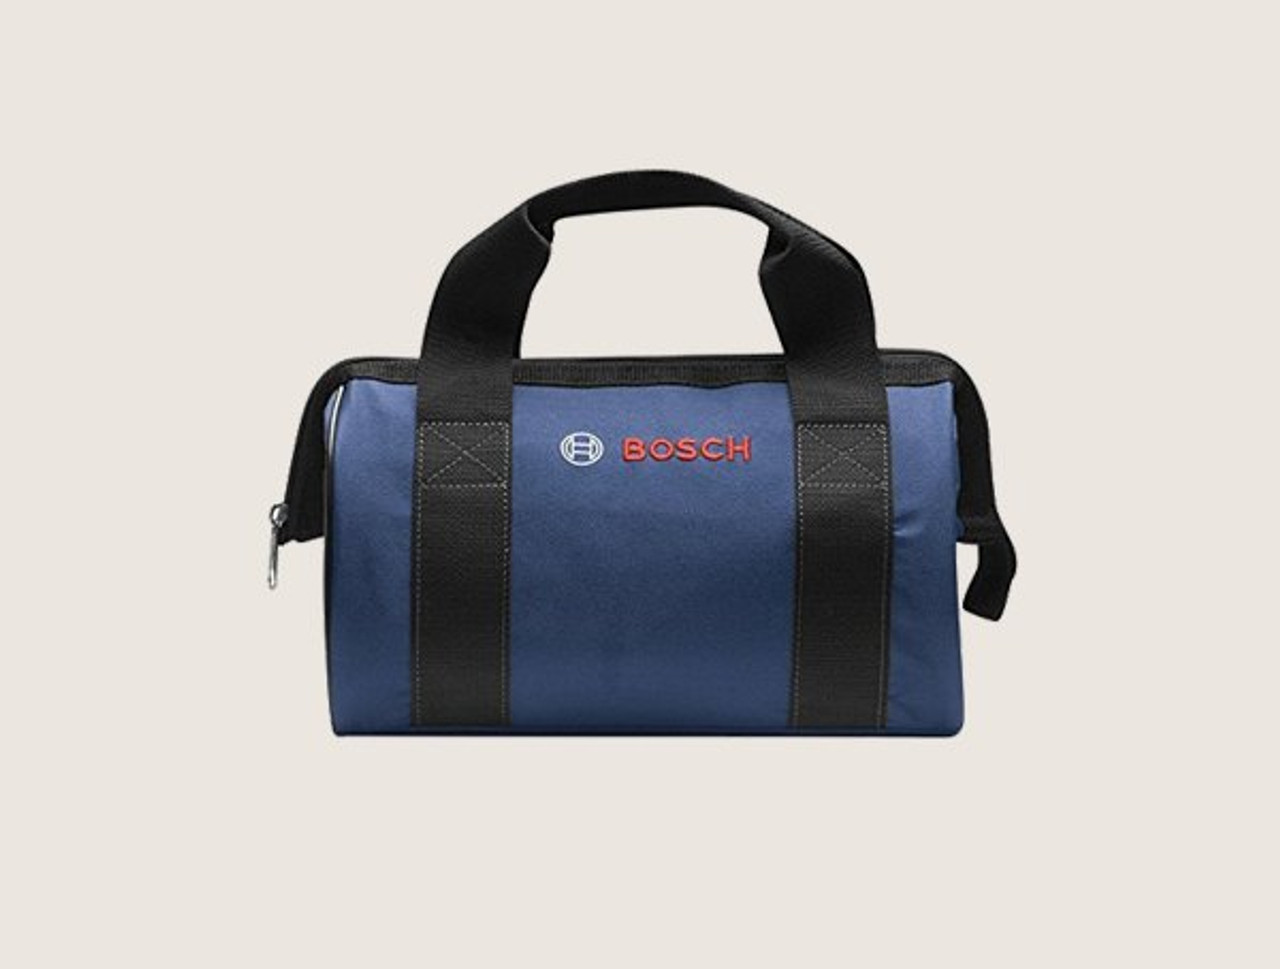 Bosch BOS-2610041762 Tool Bag - Large Size - Atlas-Machinery